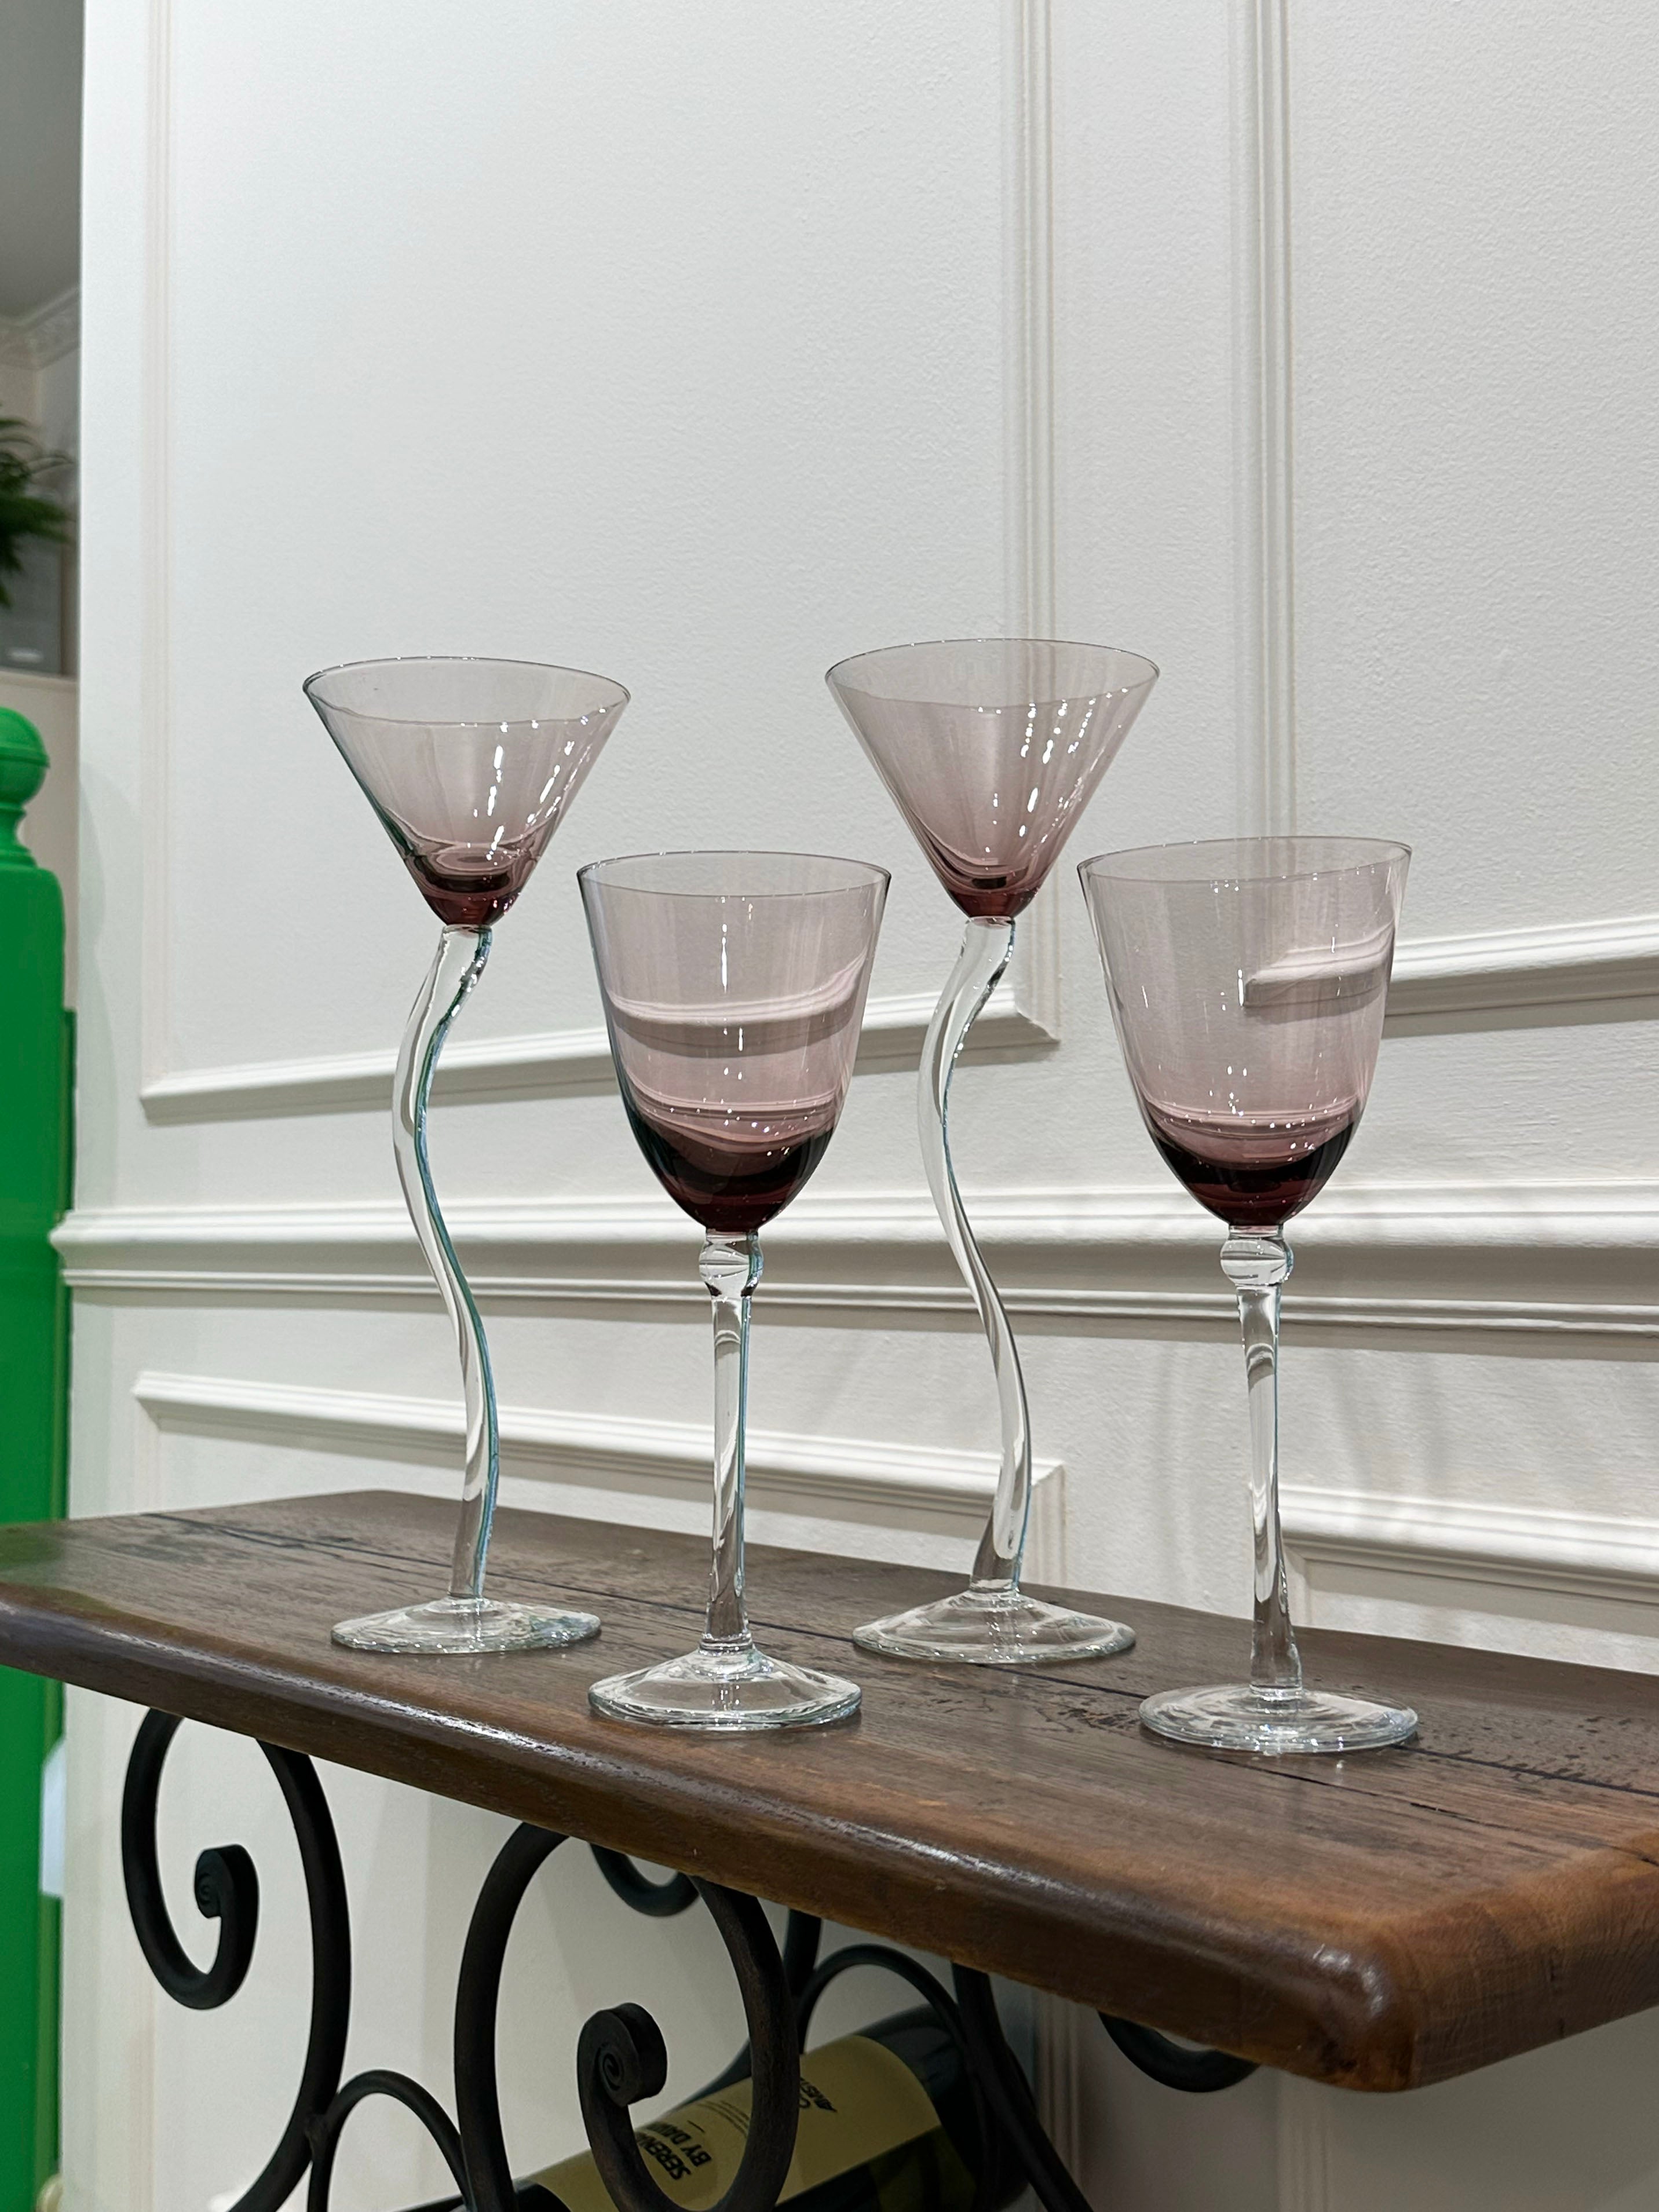 La Louème burgundy wine glasses and martini glasses